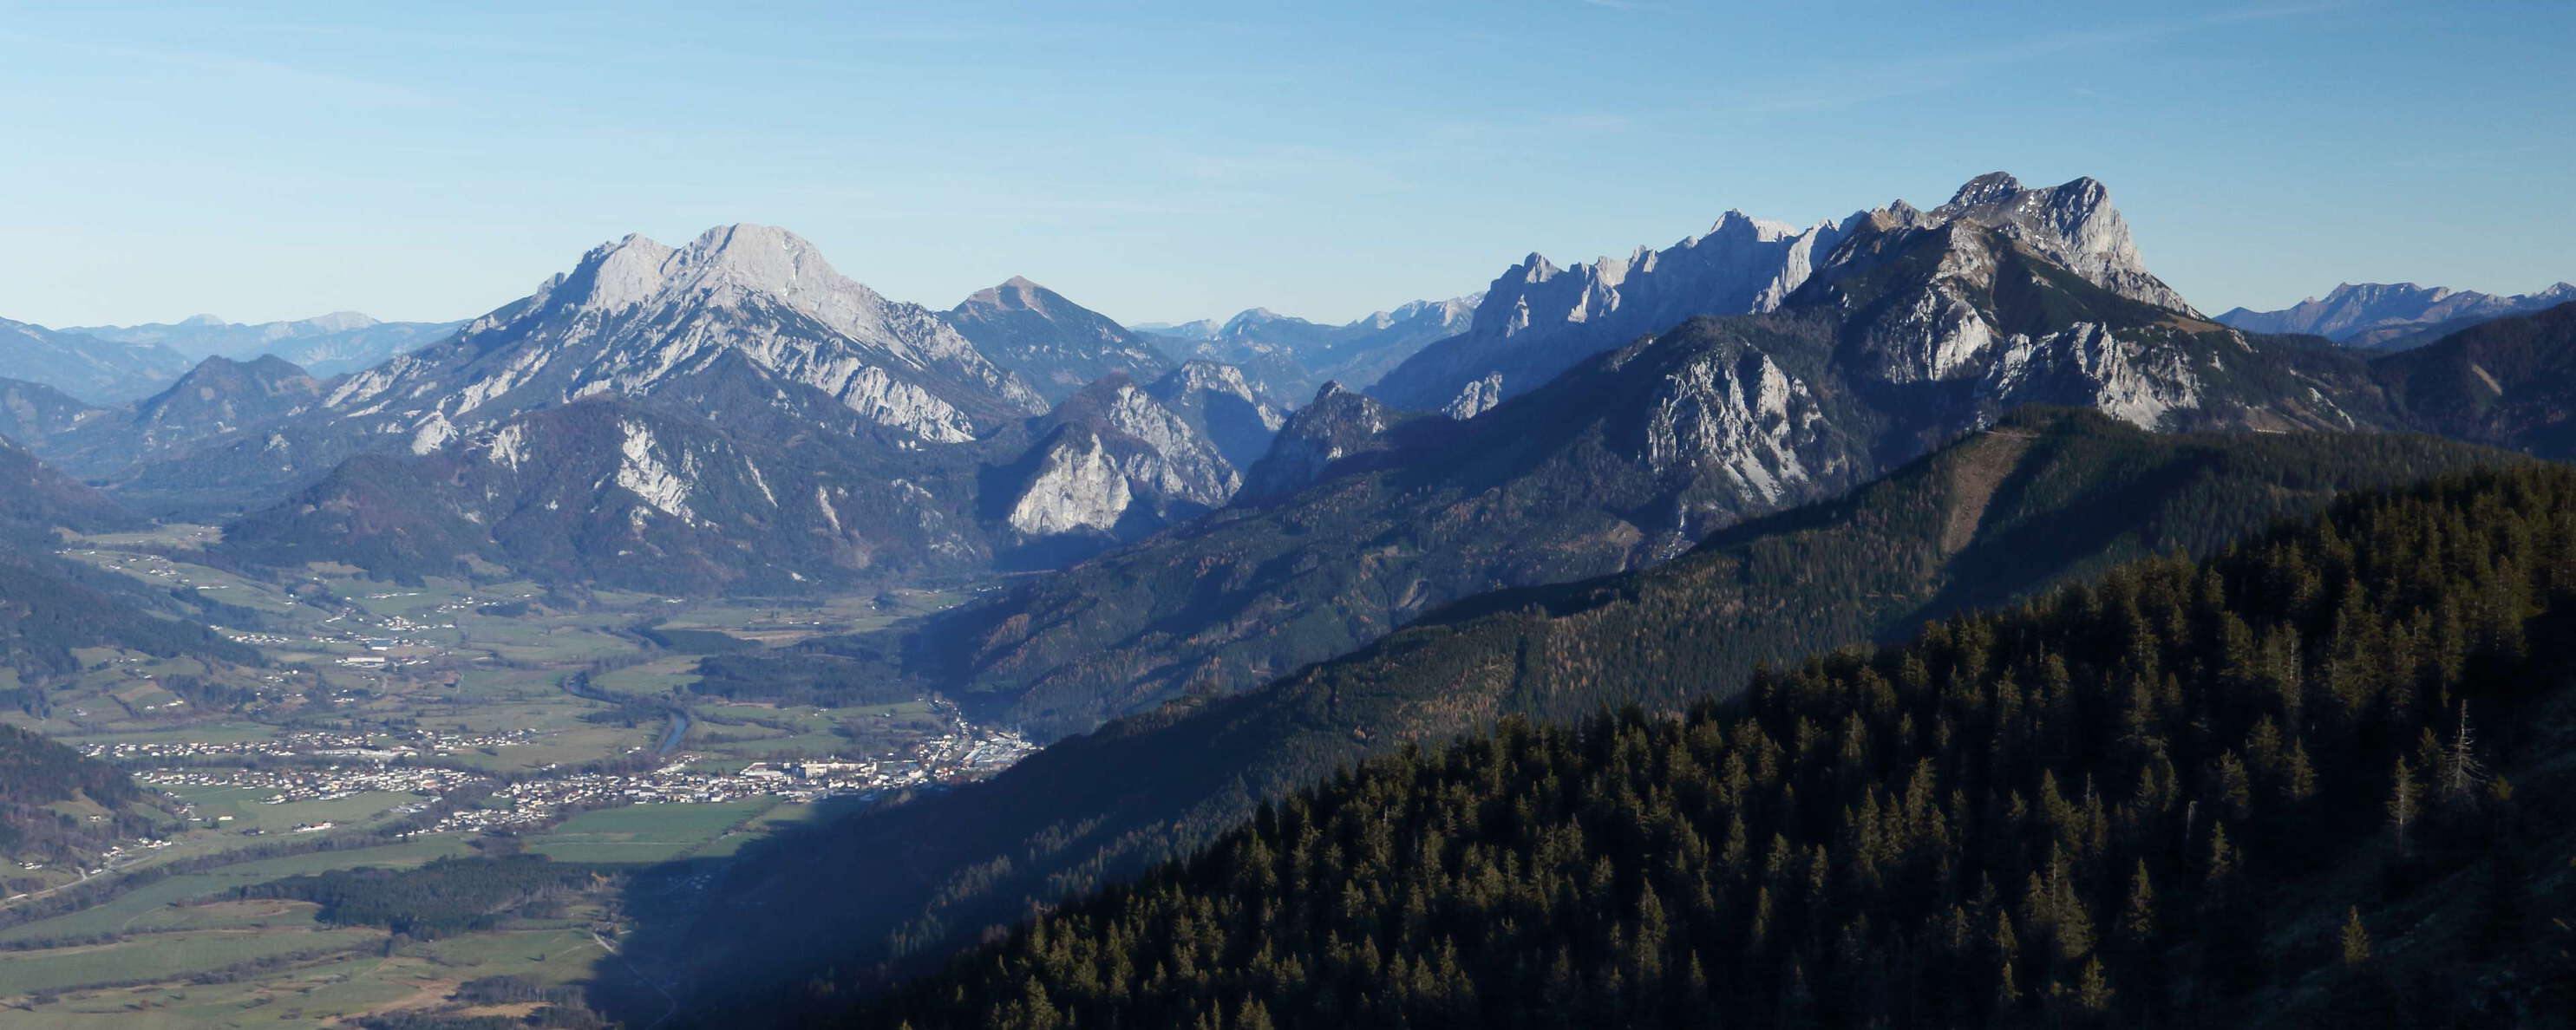 Admont Basin with Gesäuse and Ennstal Alps